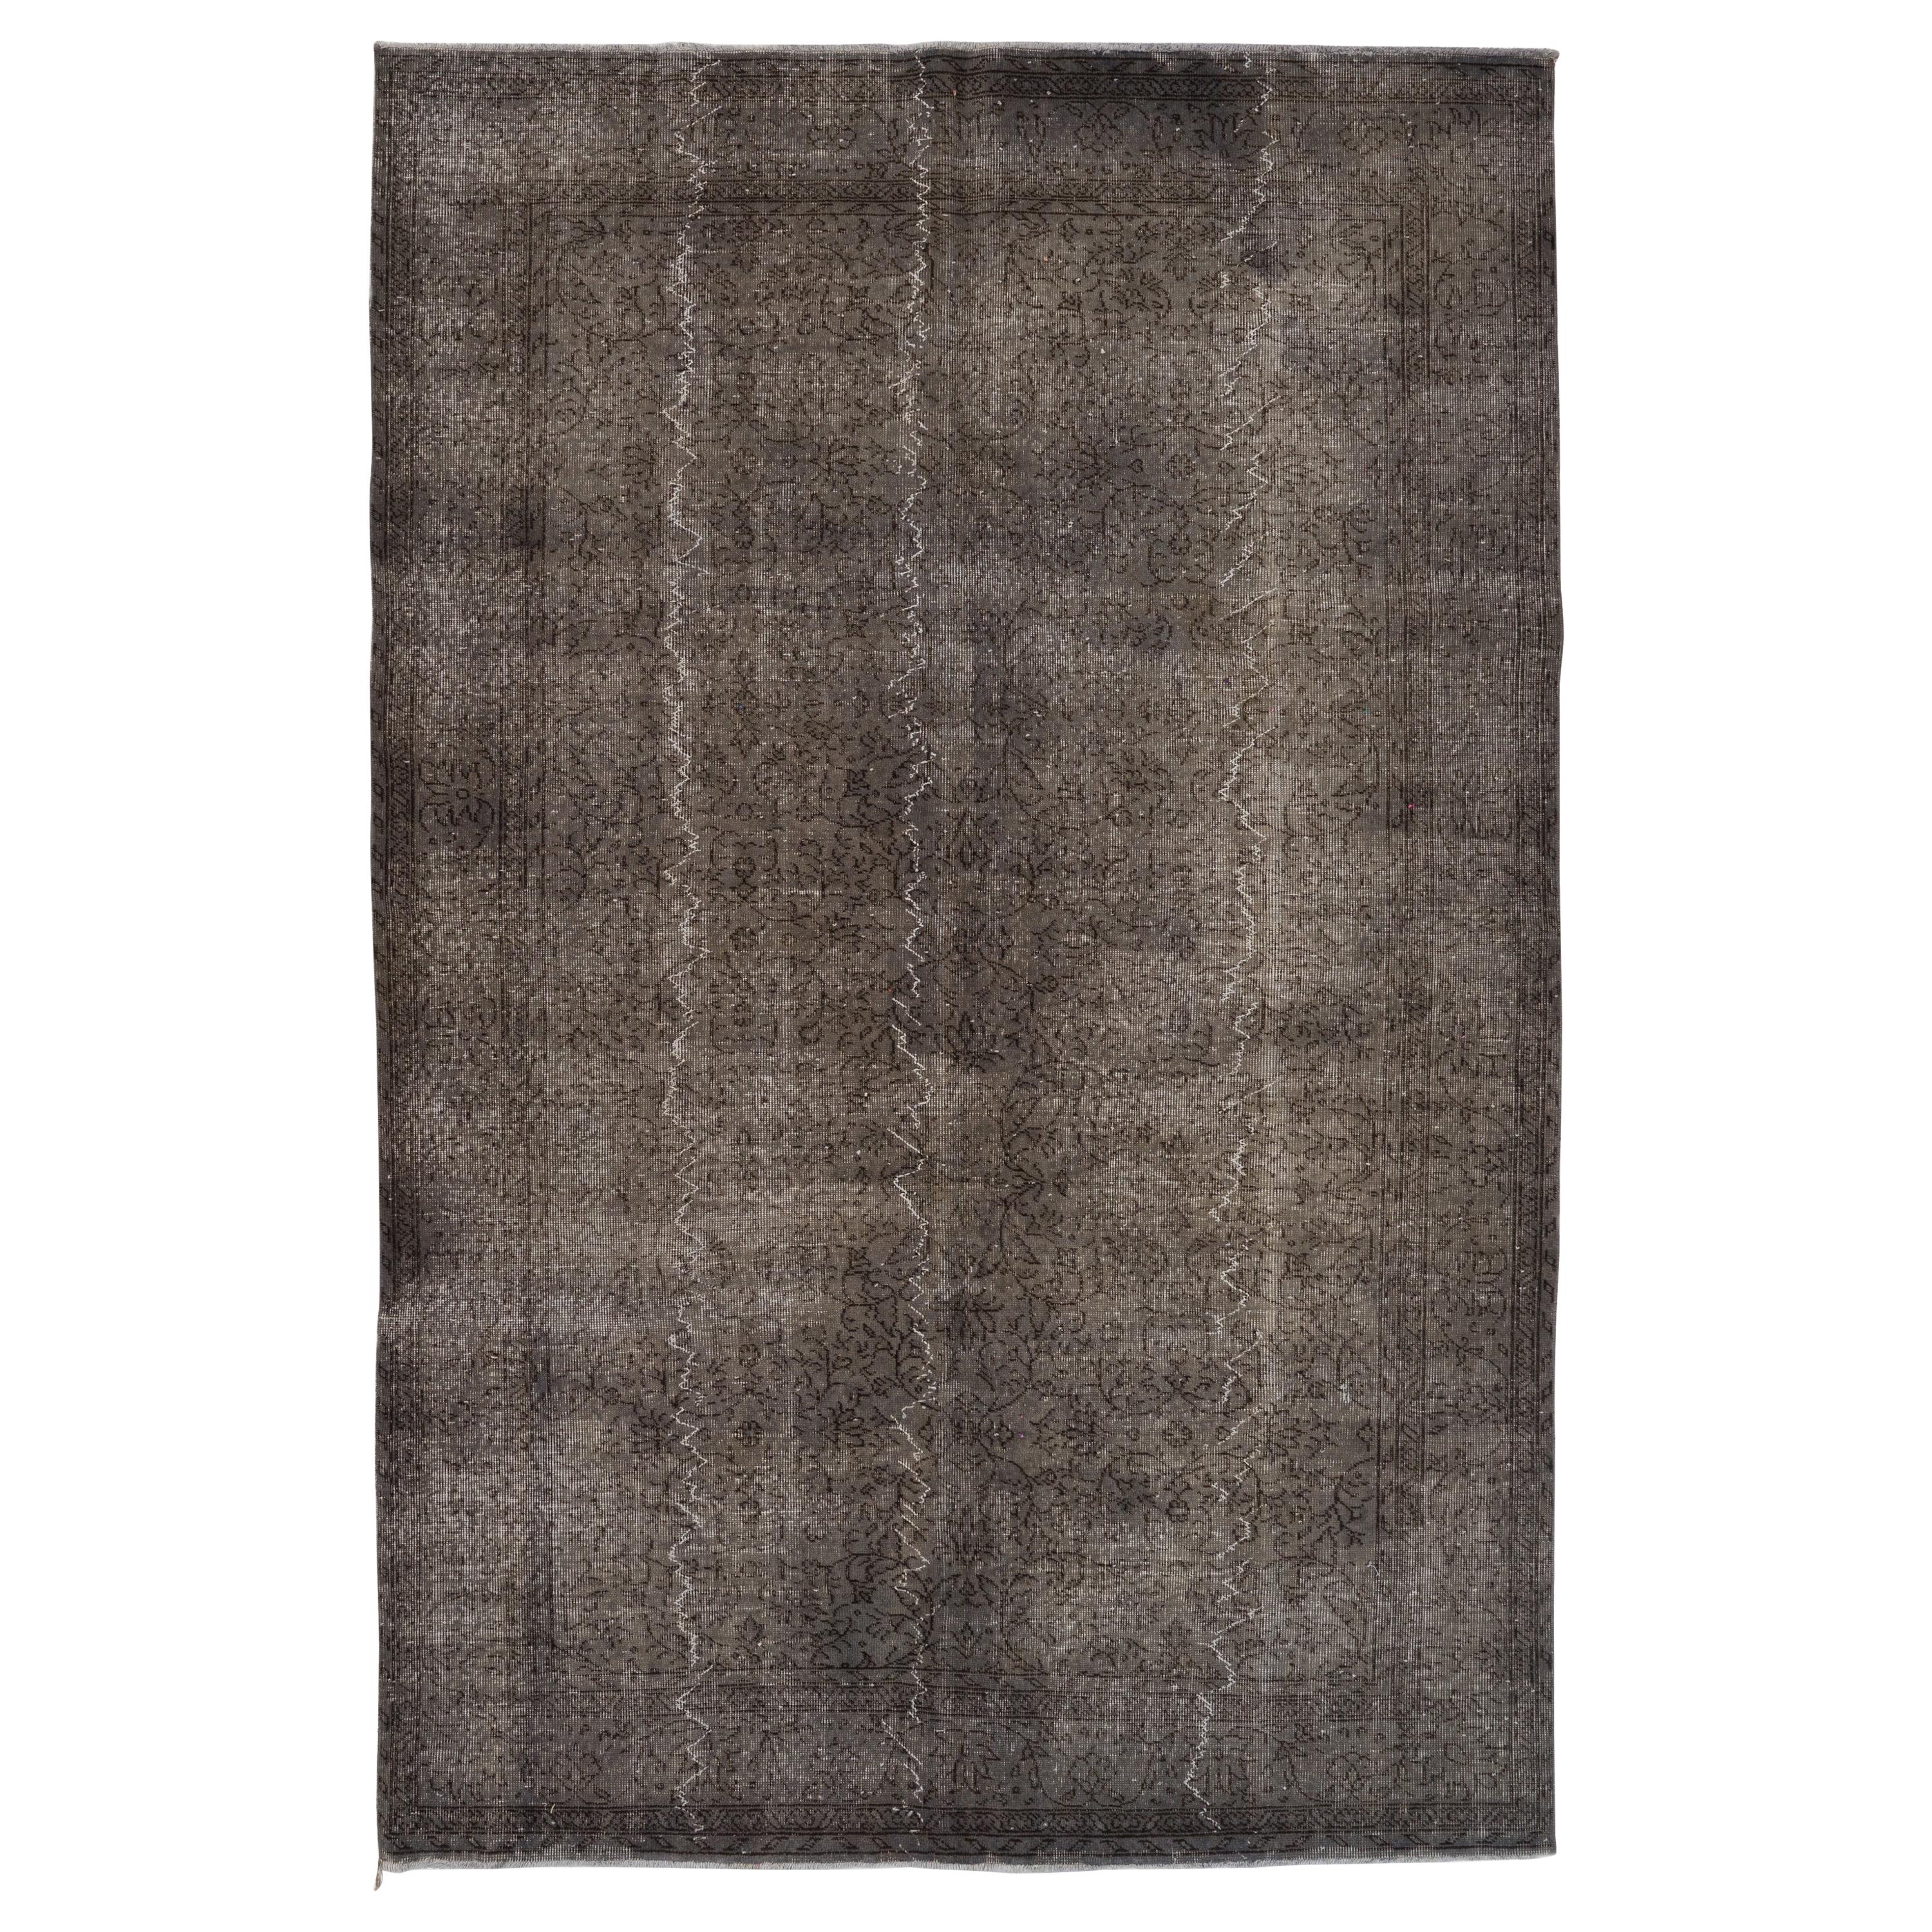 6.5x9.7 Ft Distressed Handmade Rug. Modern Gray Carpet. Turkish Floor Covering